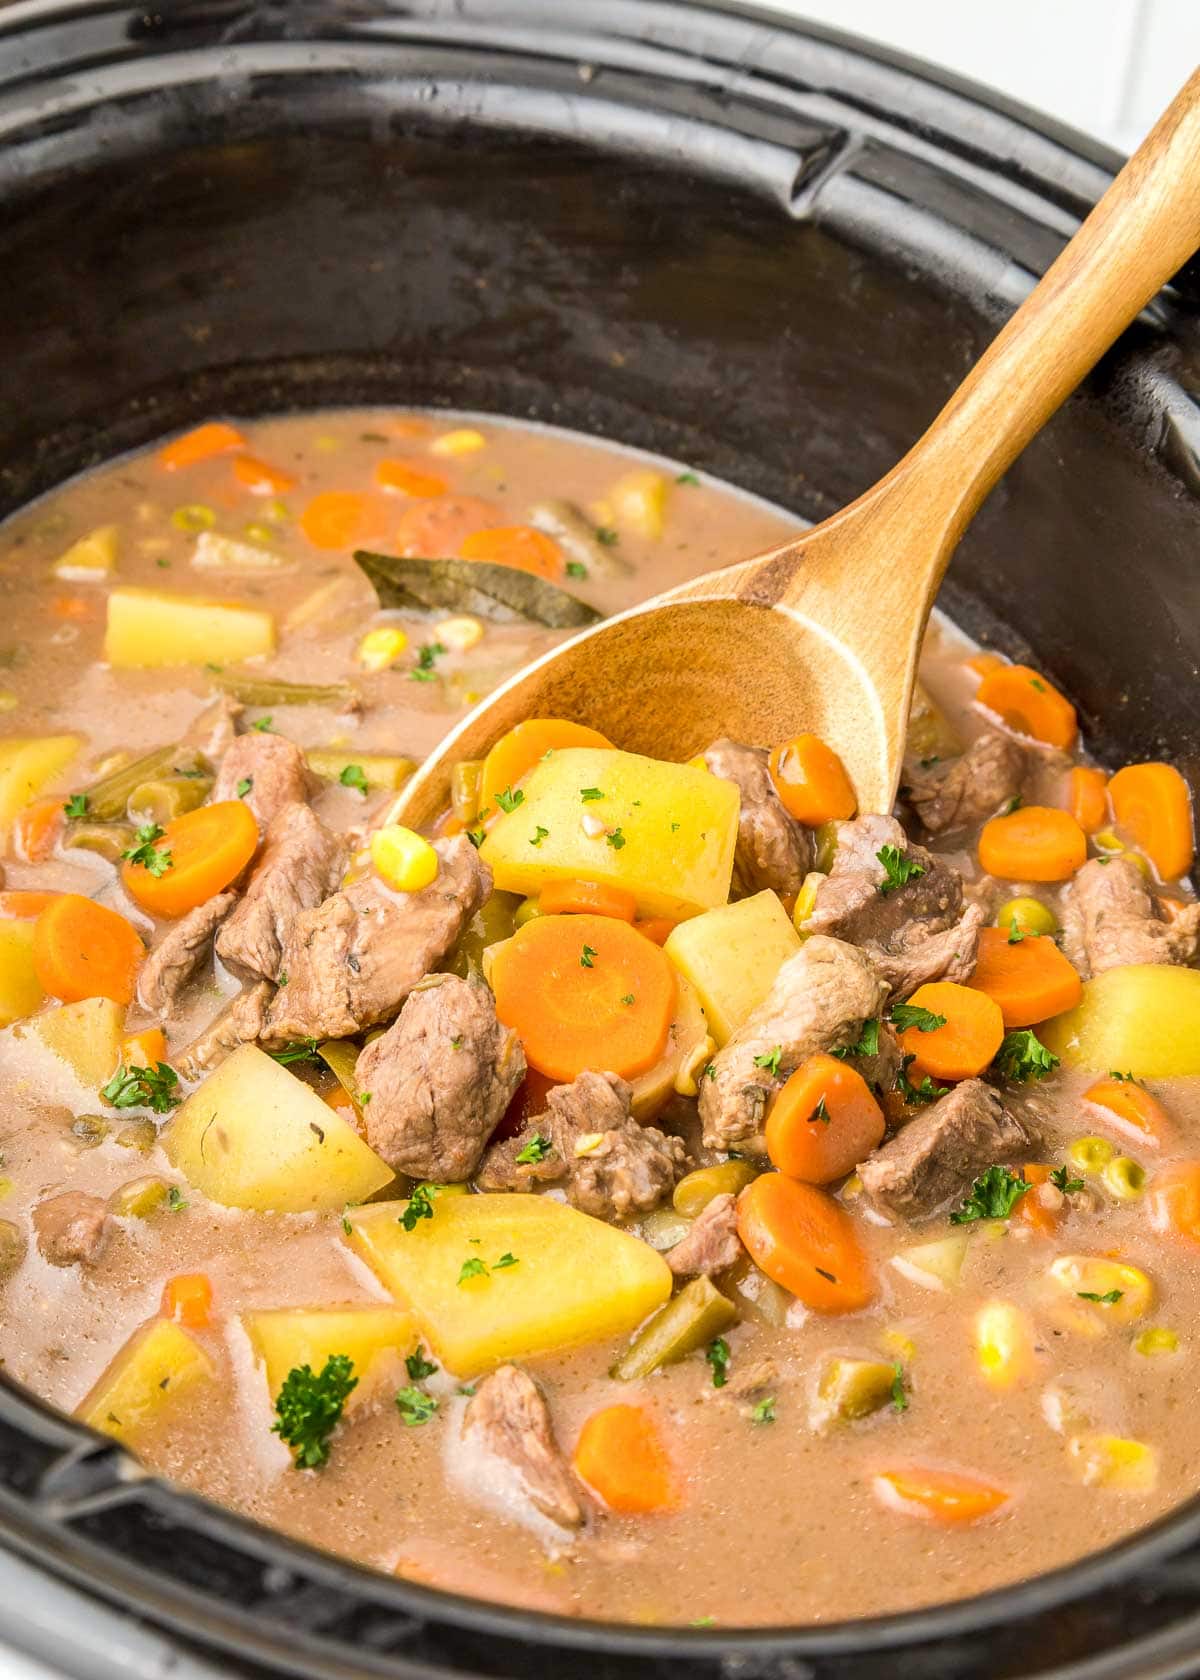 Wooden spoon stirring recipe for beef stew in crock pot.